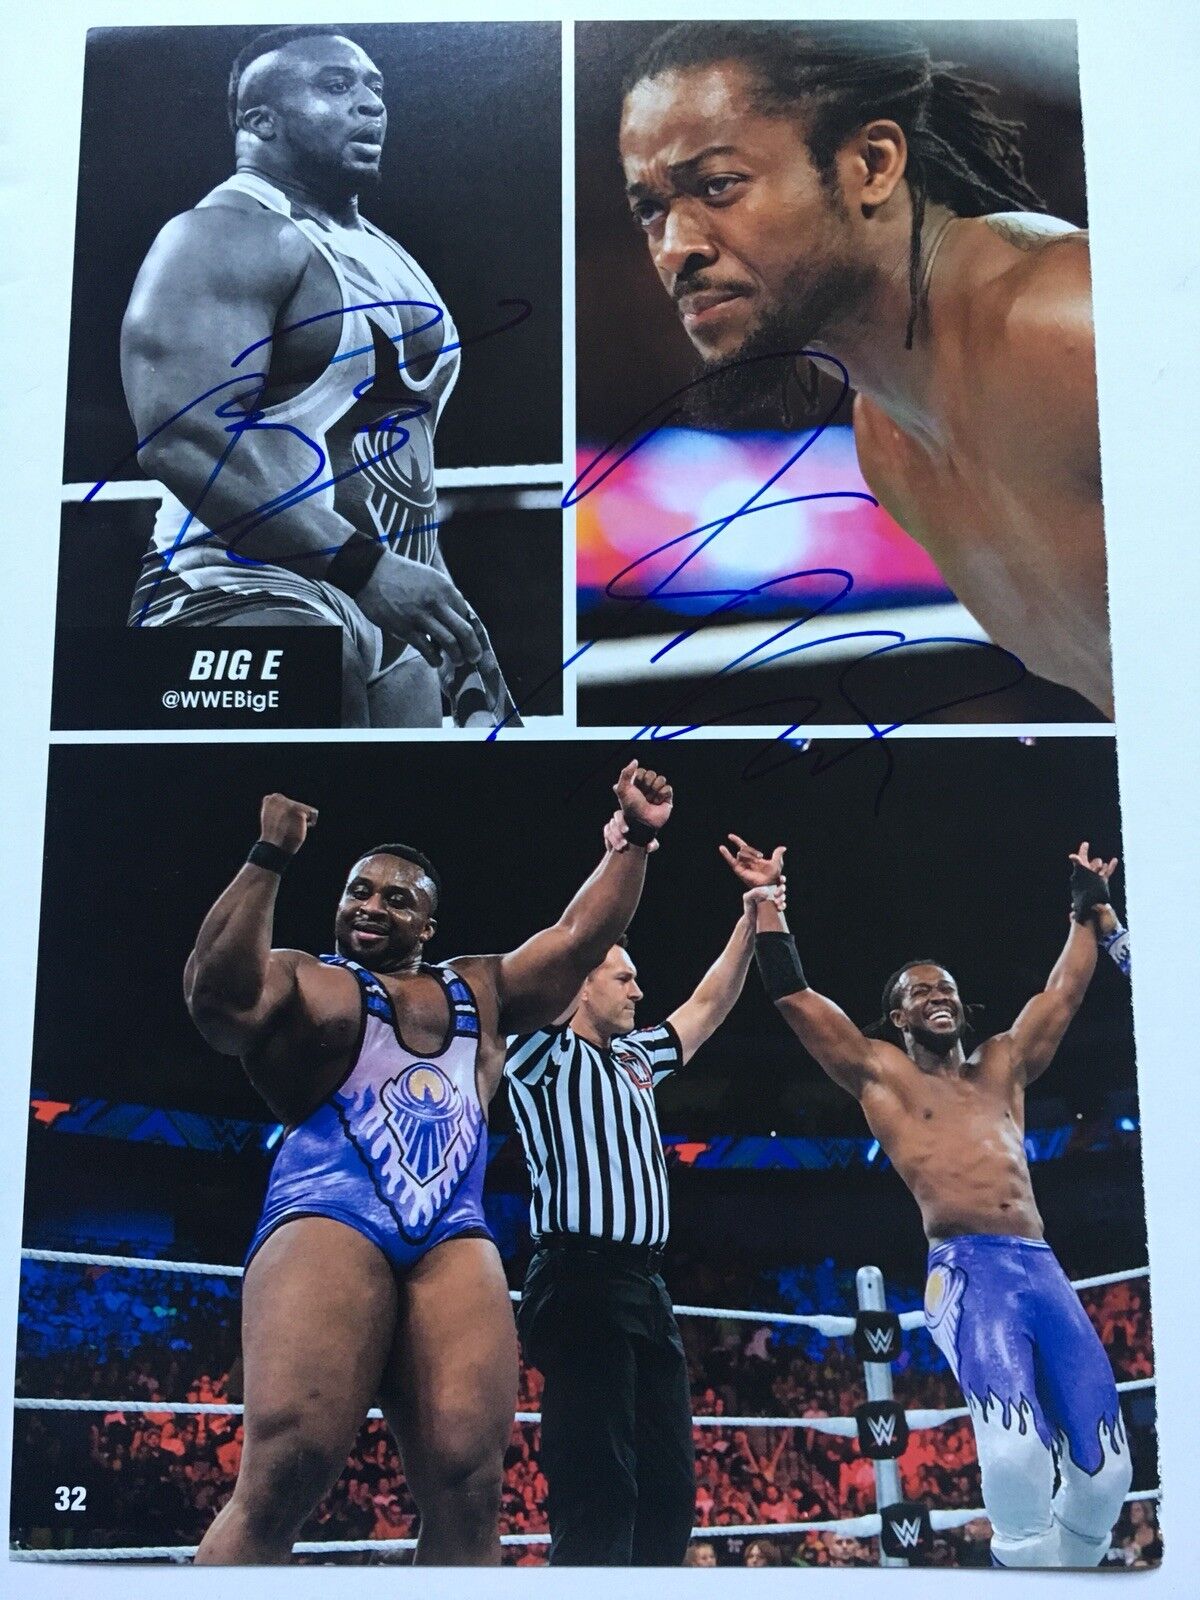 The New Day Kofi Kingston Big E Signed Photo Poster painting WWE Program Page 9x13 Size NXT AEW